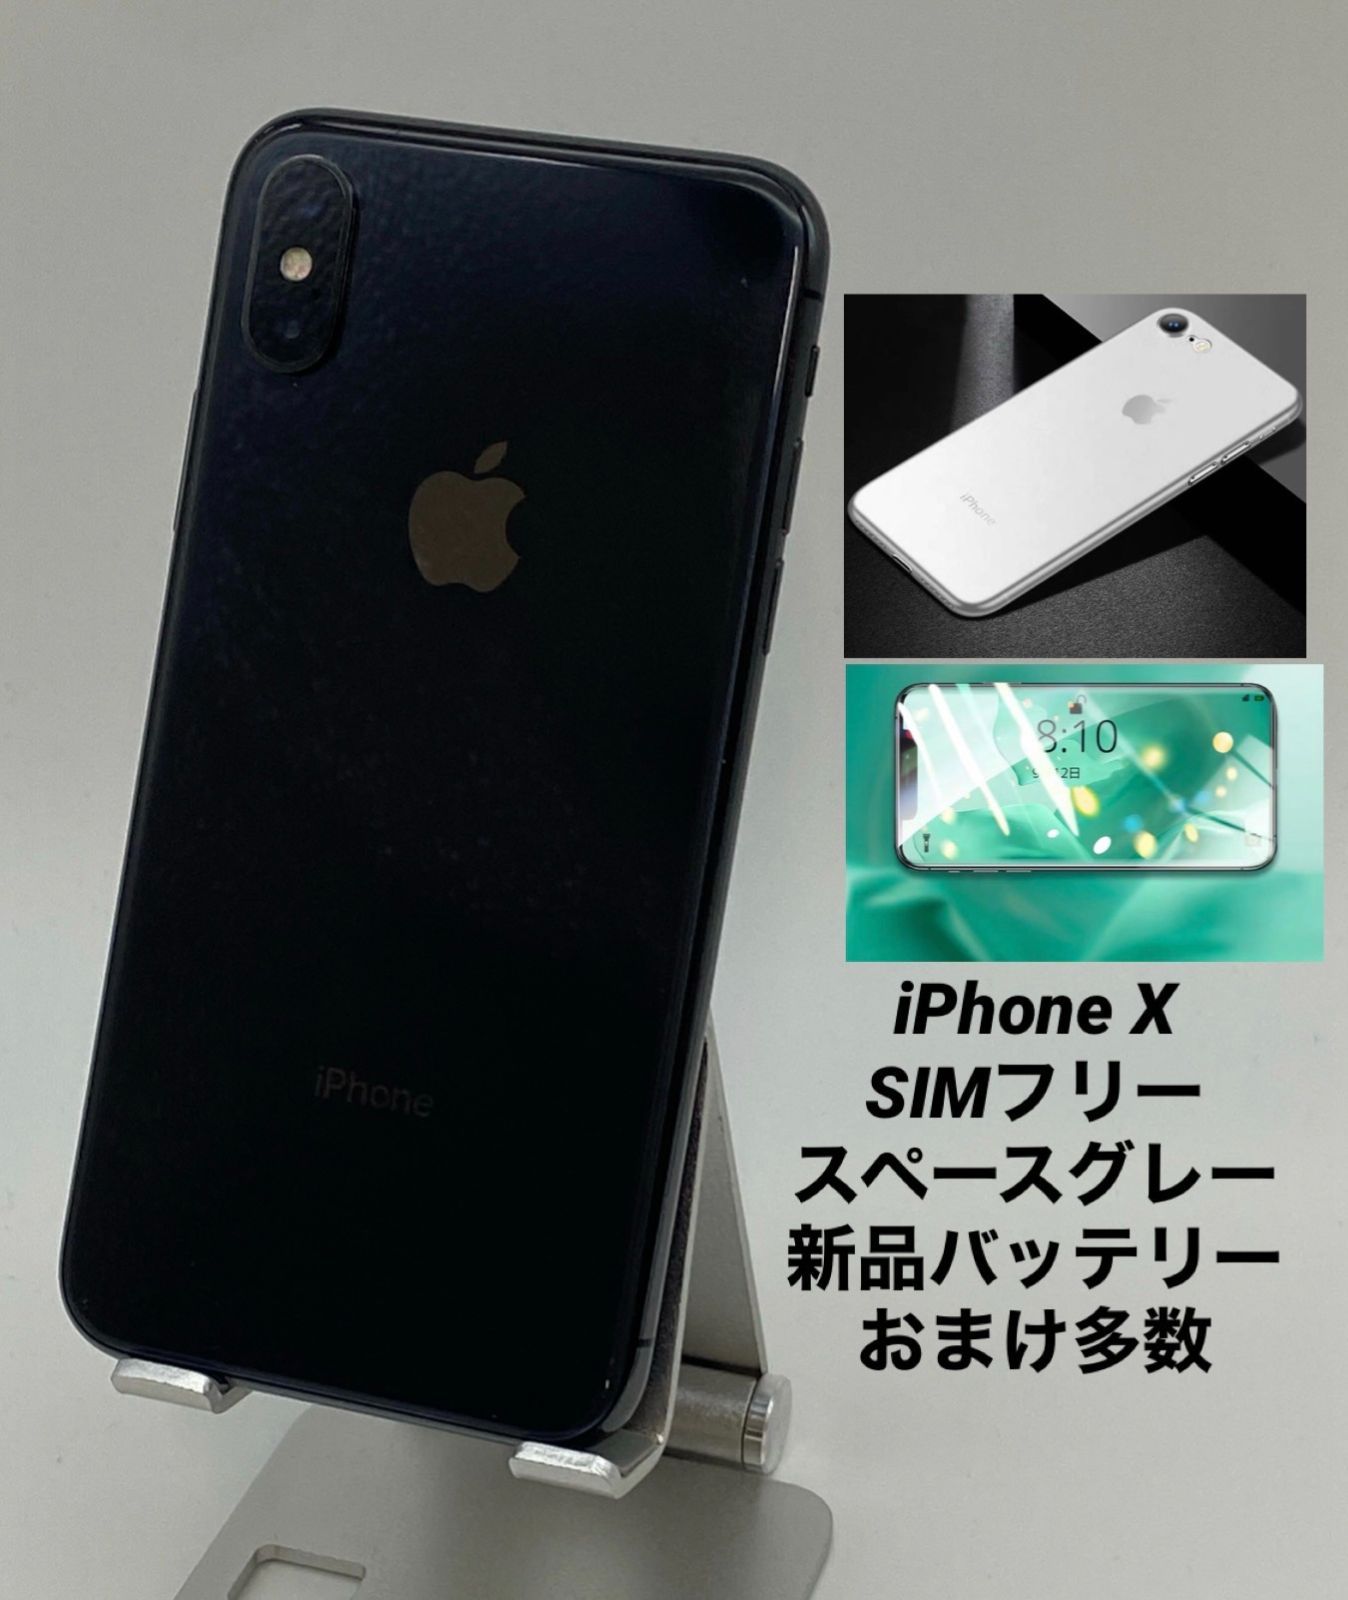 iPhoneX 256GB スペースグレイ/シムフリー/大容量3100mAh新品 